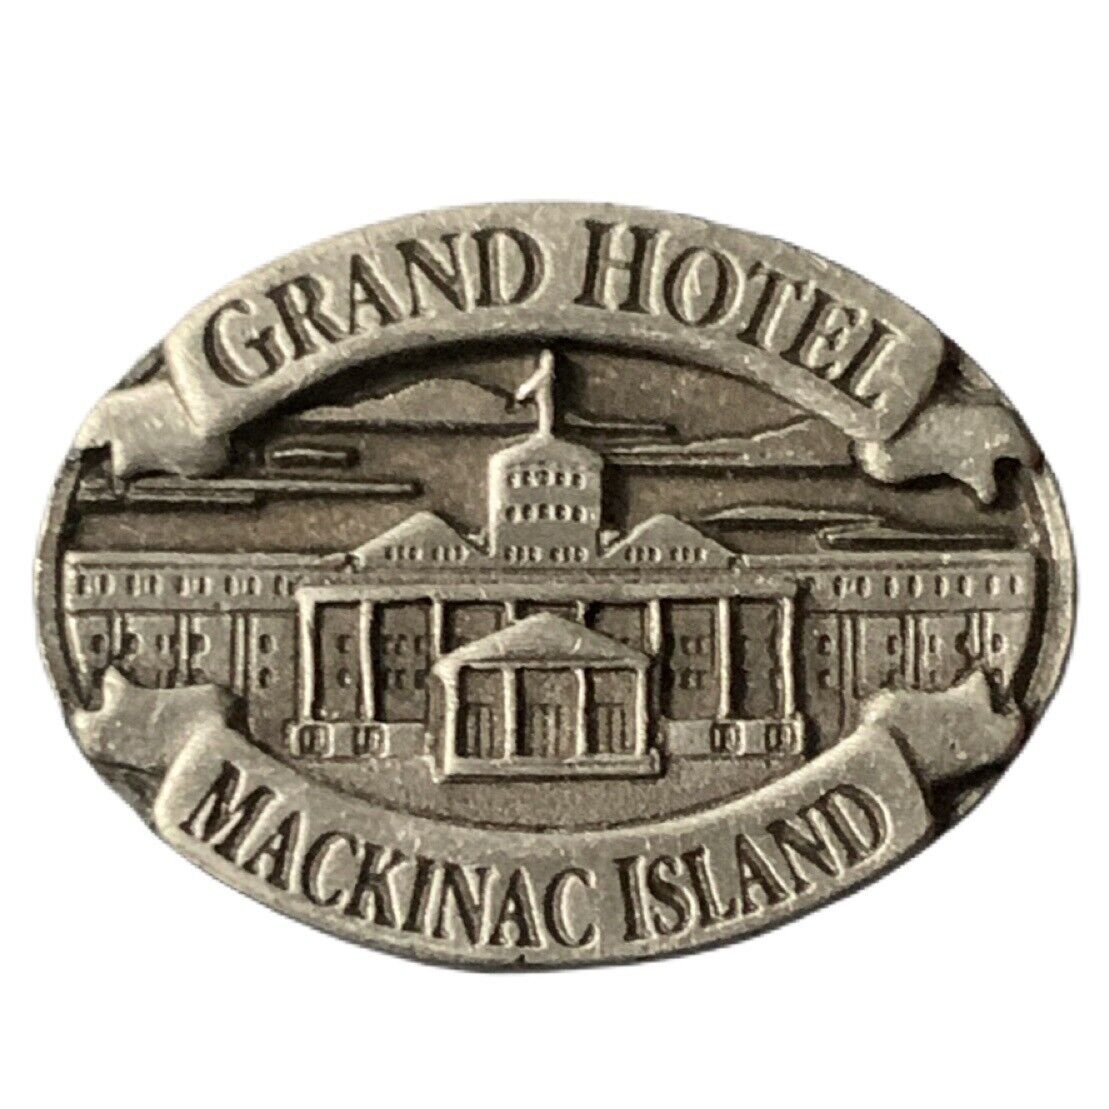 Grand Hotel Mackinac Island Scenic Pewter Travel Souvenir Pin